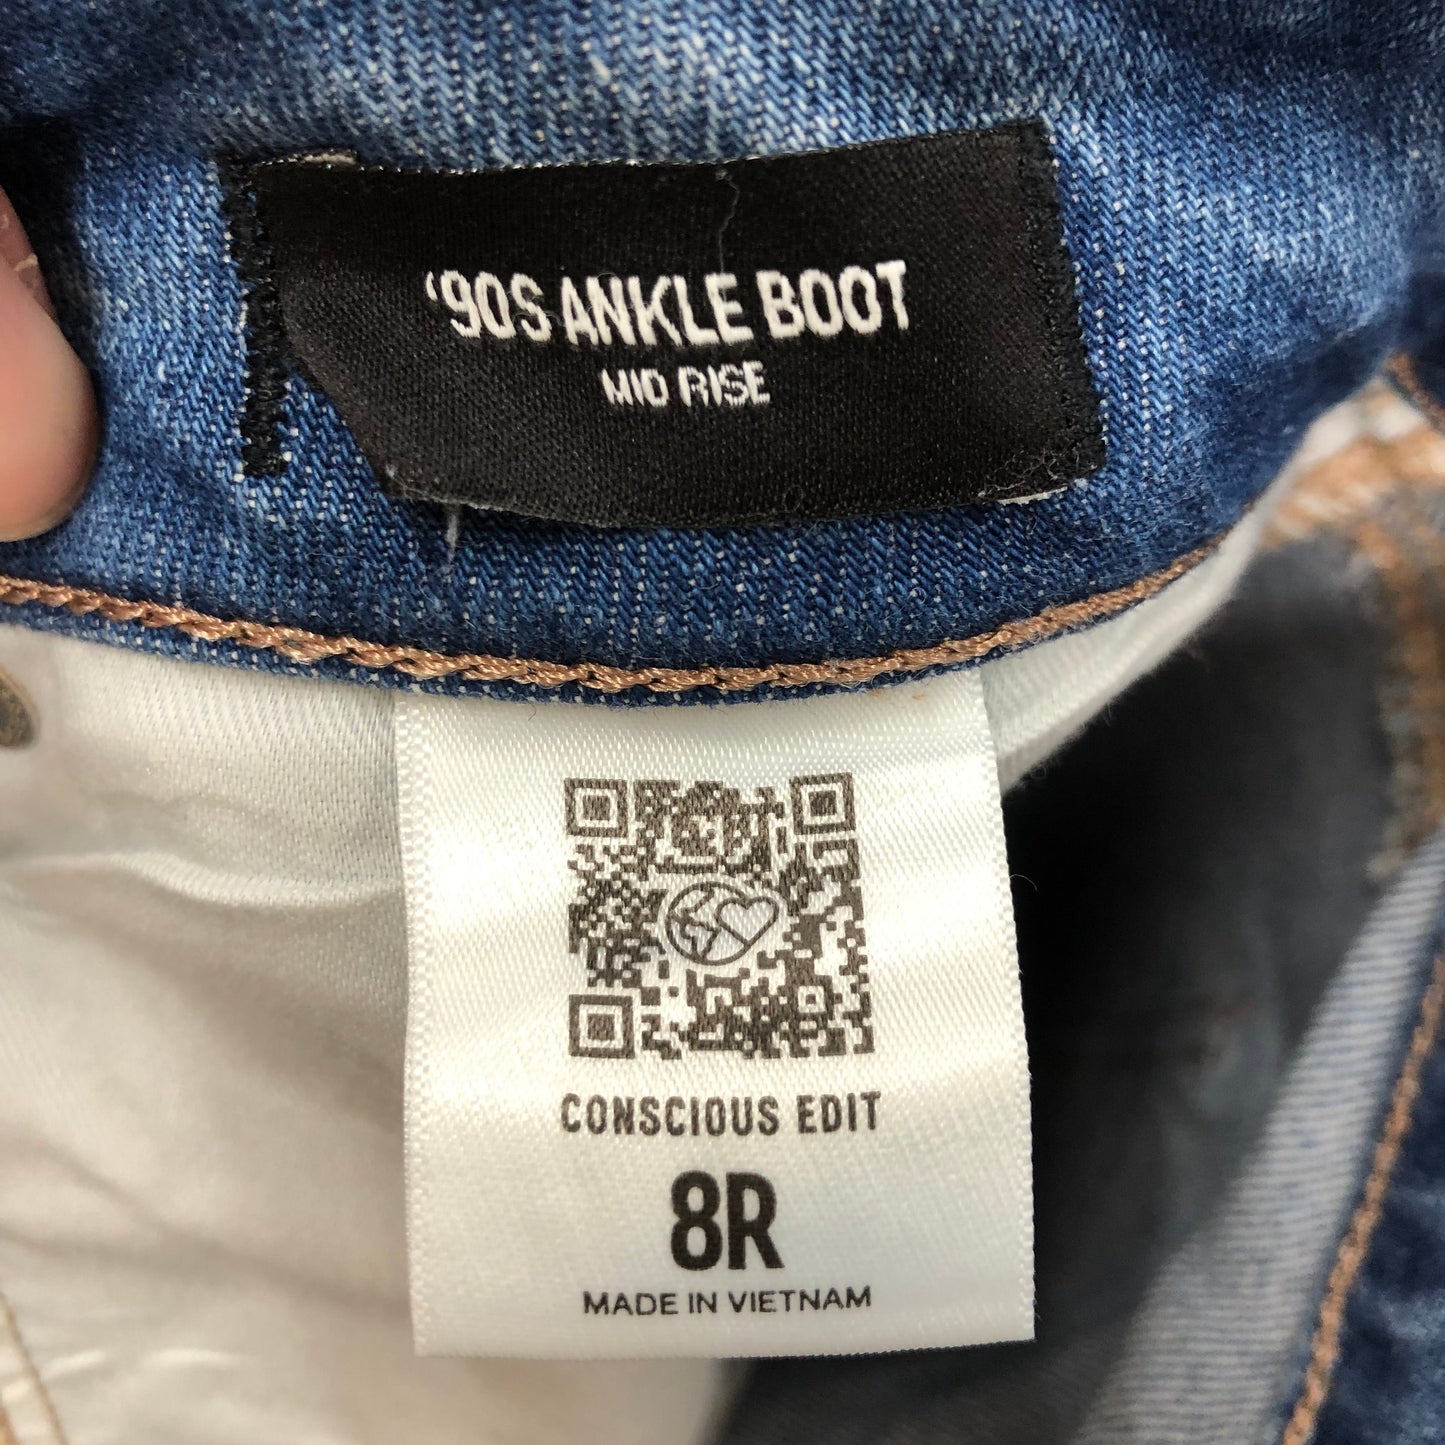 Blue Denim Jeans Boot Cut Express, Size 8